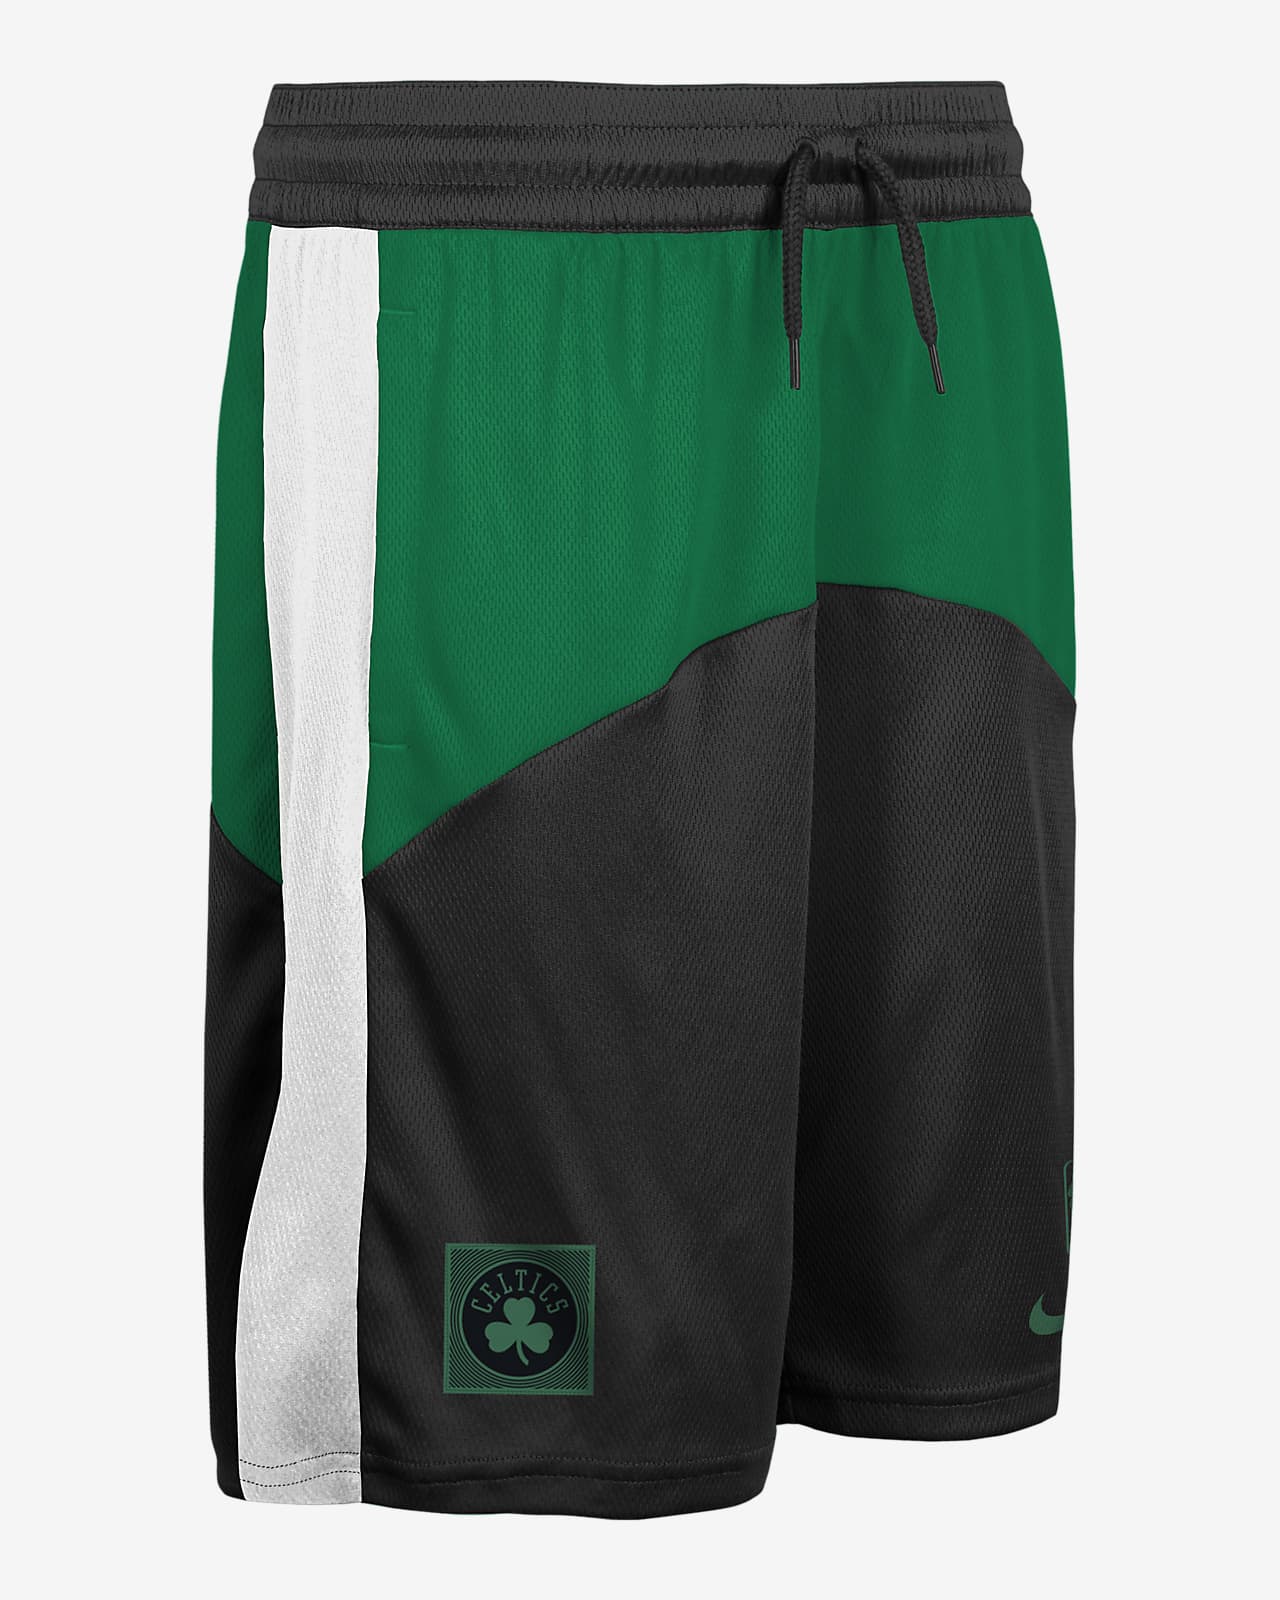 Shorts Nike Dri-FIT de la NBA para niños talla grande Boston Celtics Starting 5